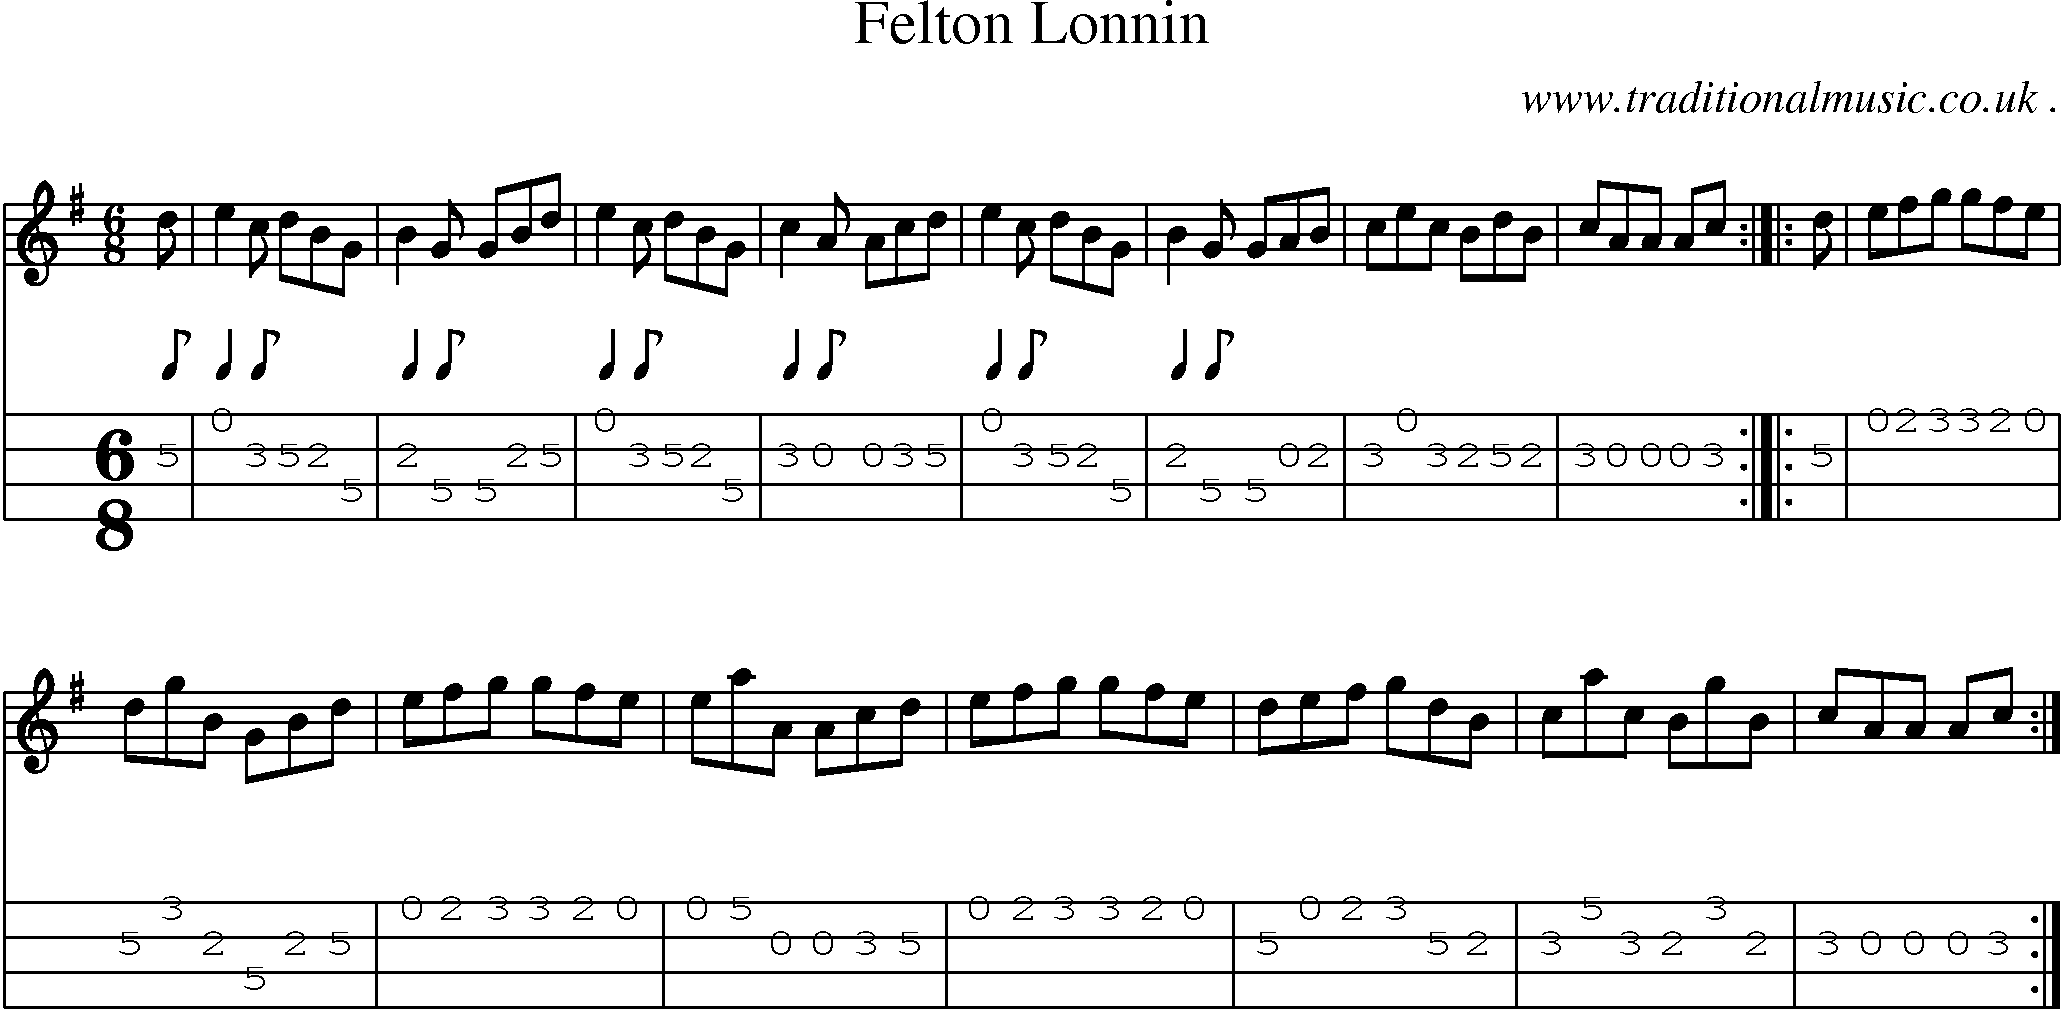 Sheet-Music and Mandolin Tabs for Felton Lonnin